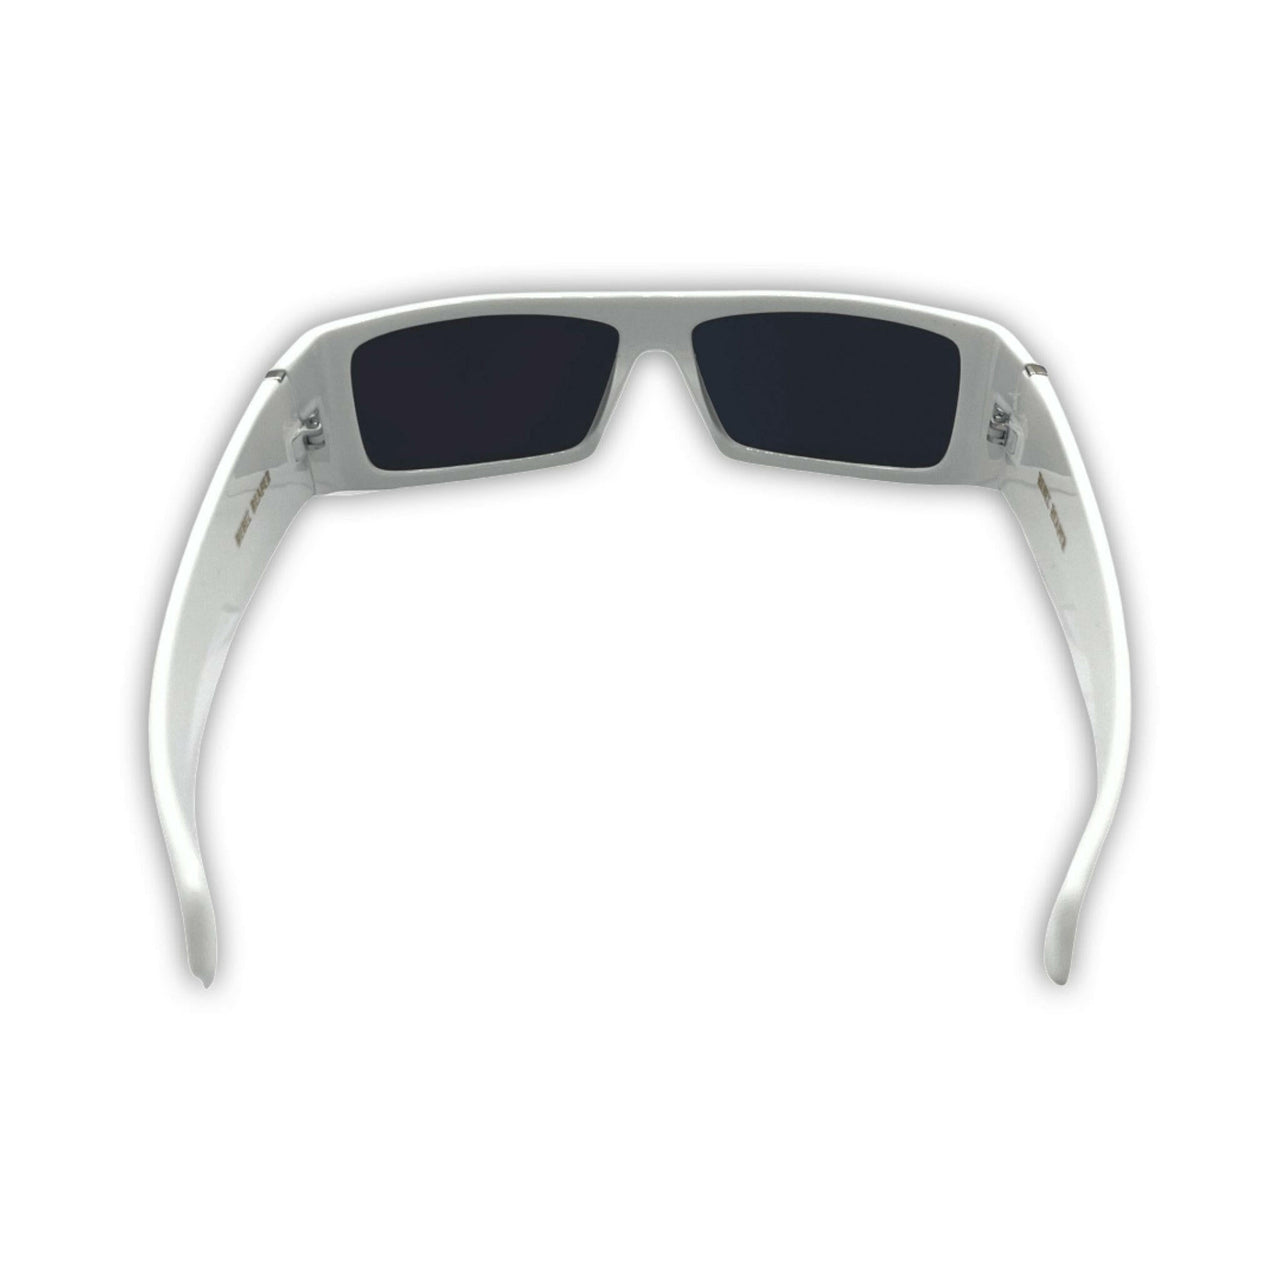 Slick White Sunglasses - Rebel Reaper Clothing Company sunglasses